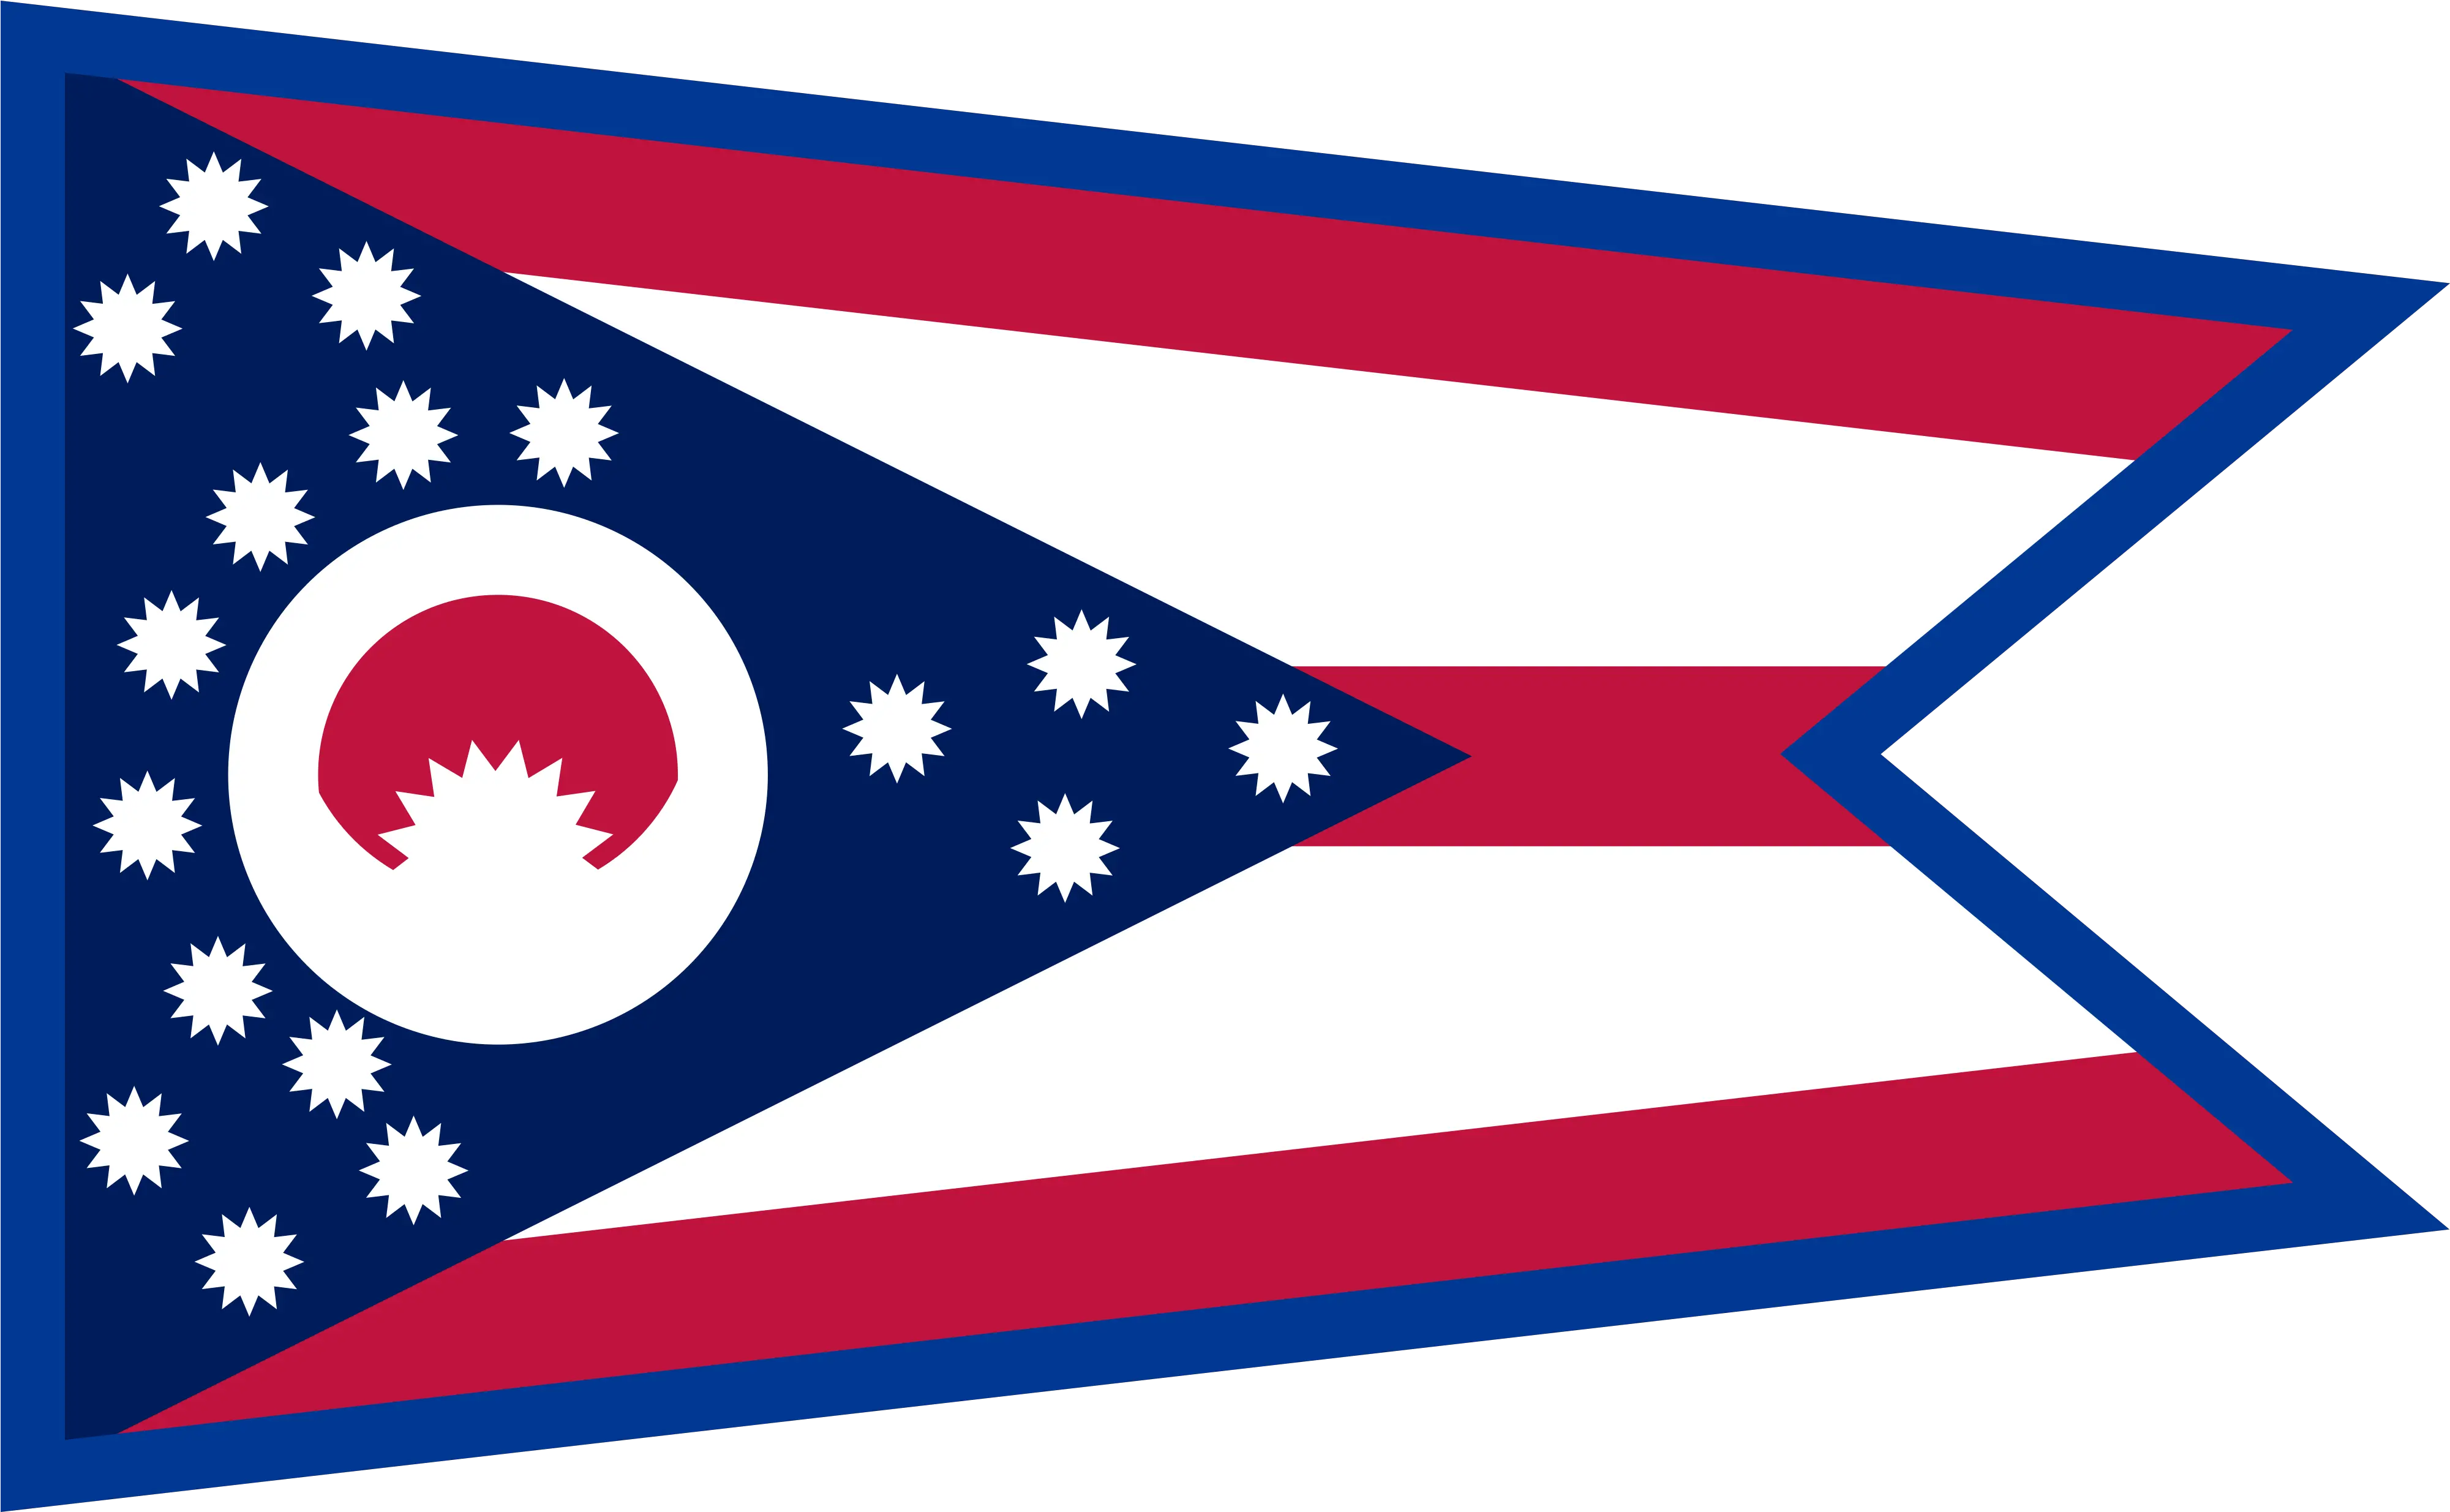 Download Ocohio Nepal Animation Ohio Flag Full Size Png Ohio State Flag Small Size Nepal Flag Png